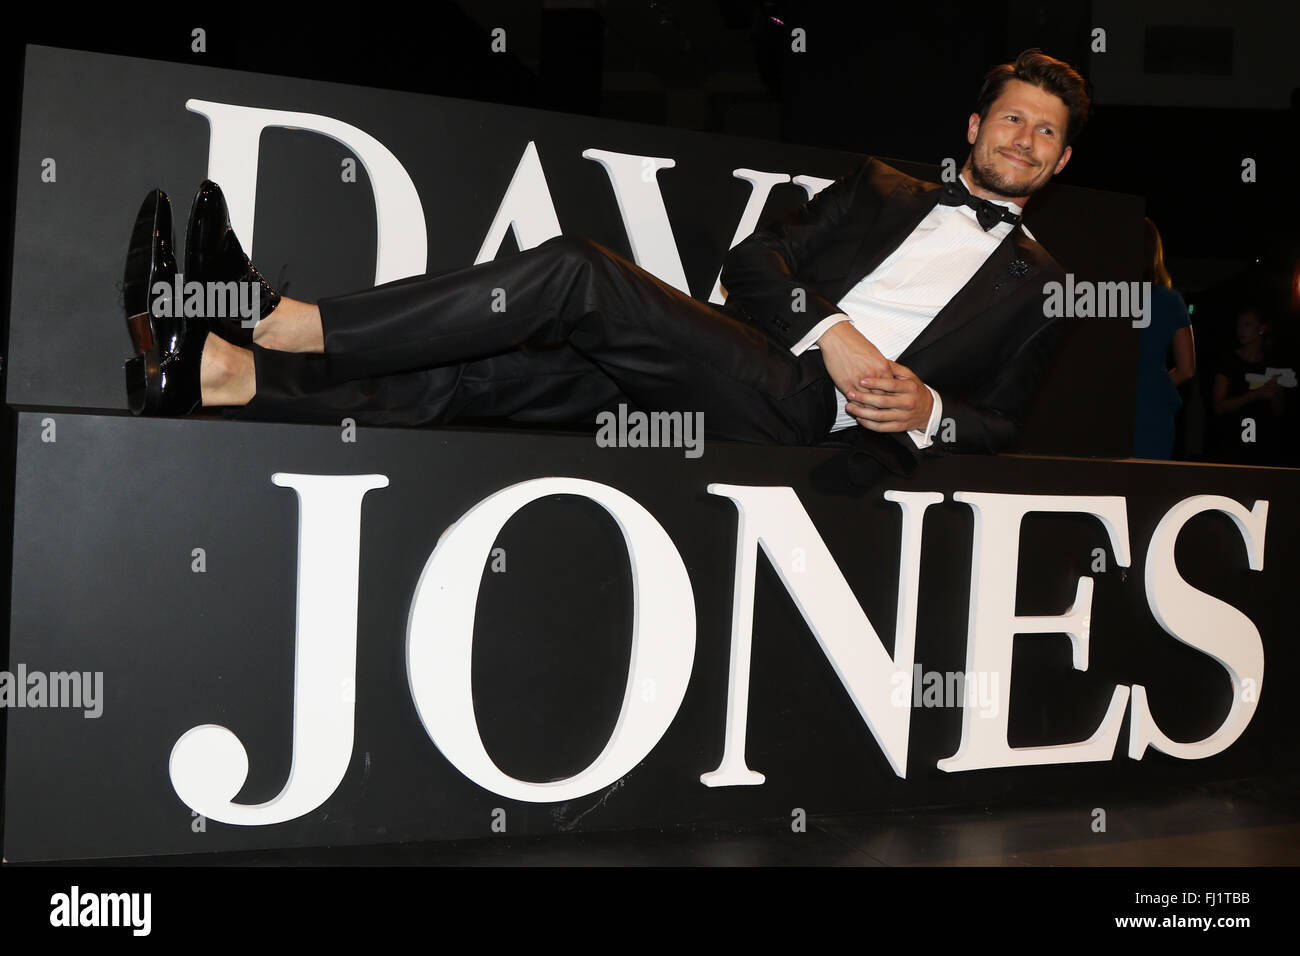 Sydney, Australia. 3 Feb 2016. Model Jason Dundas poses after the rehearsal ahead of the David Jones Autumn/Winter 2016 launch. Stock Photo